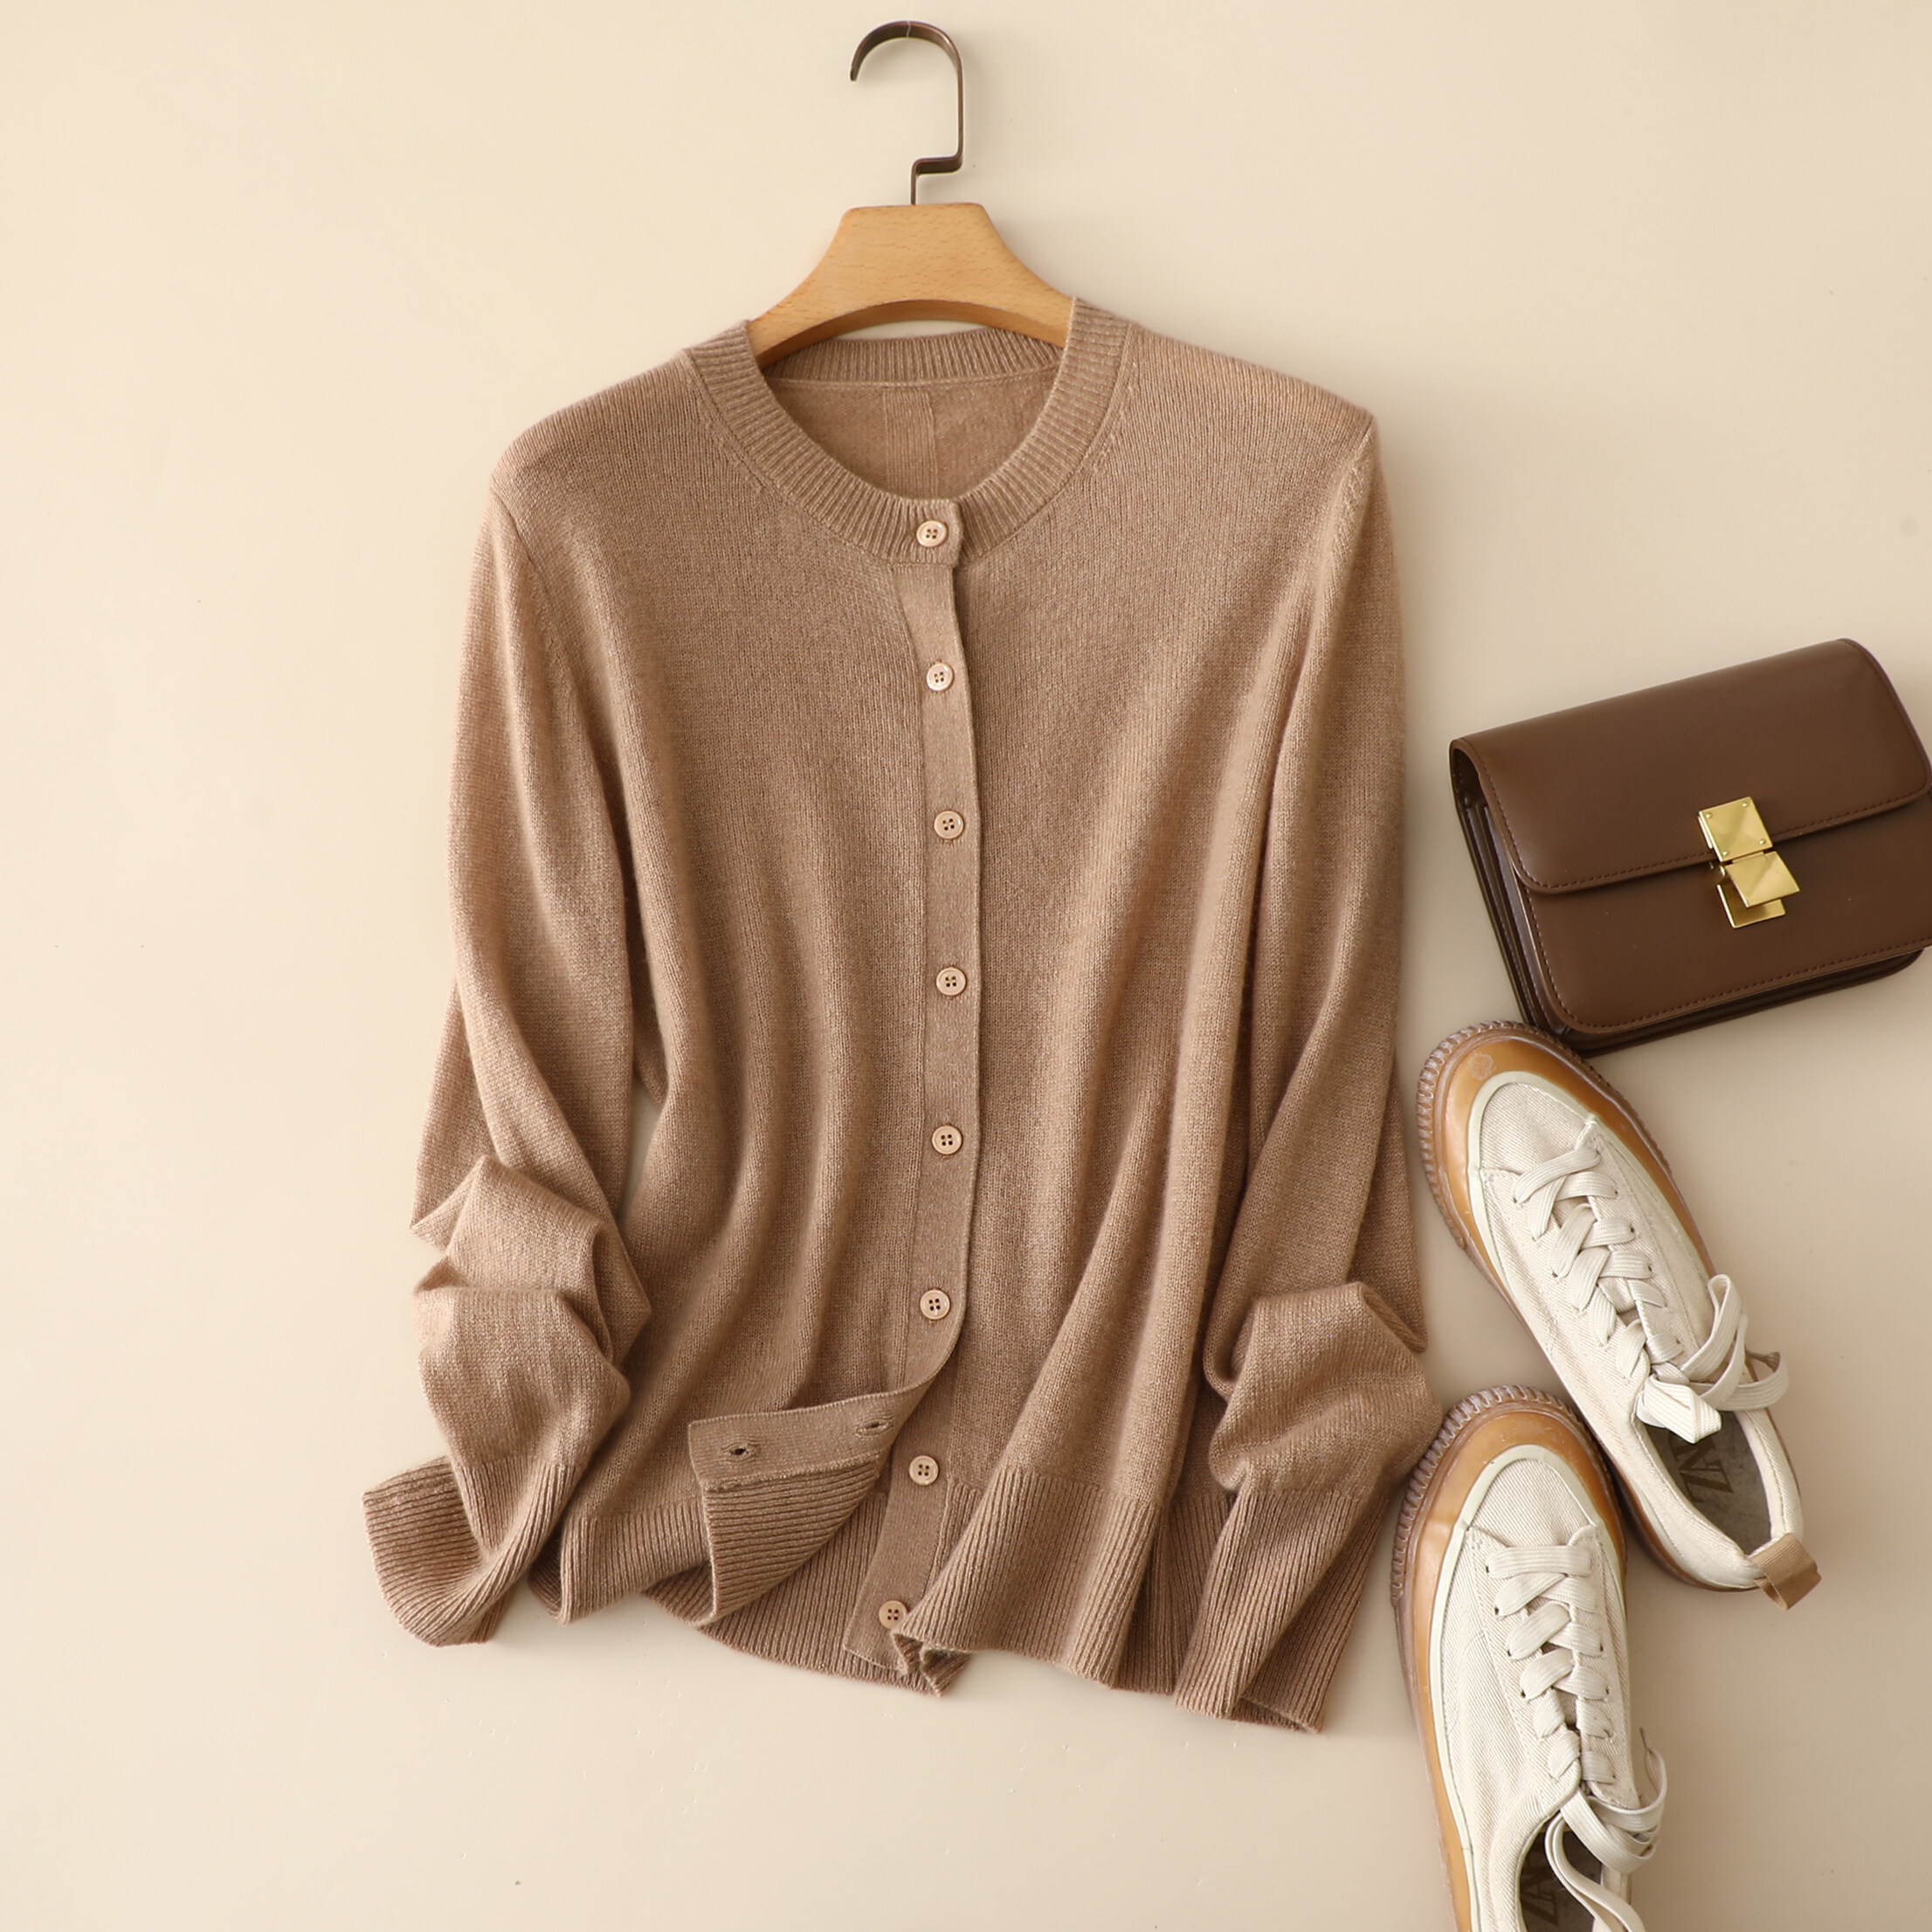 Nanteng New Stock 12GG Monochrome Small Round Neck Long Sleeve Women Button Cardigan 100% Cashmere Sweater